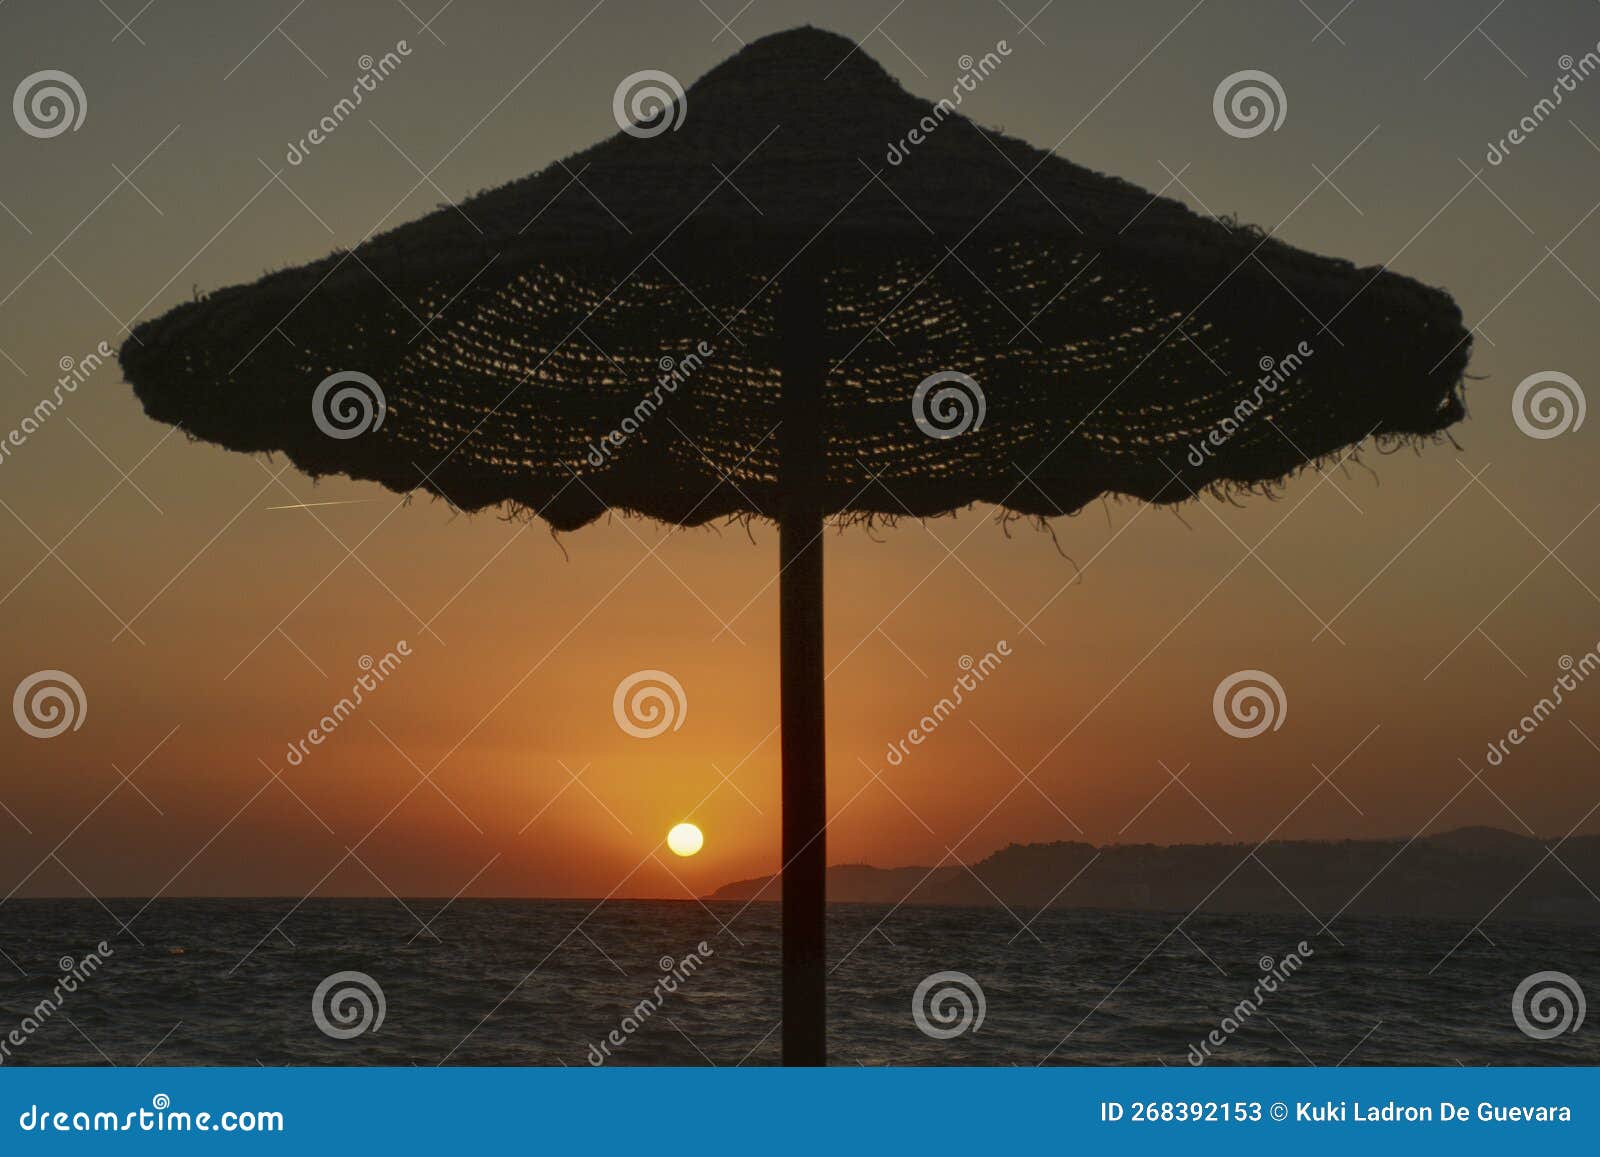 beach umbrella at sunset with setting sun